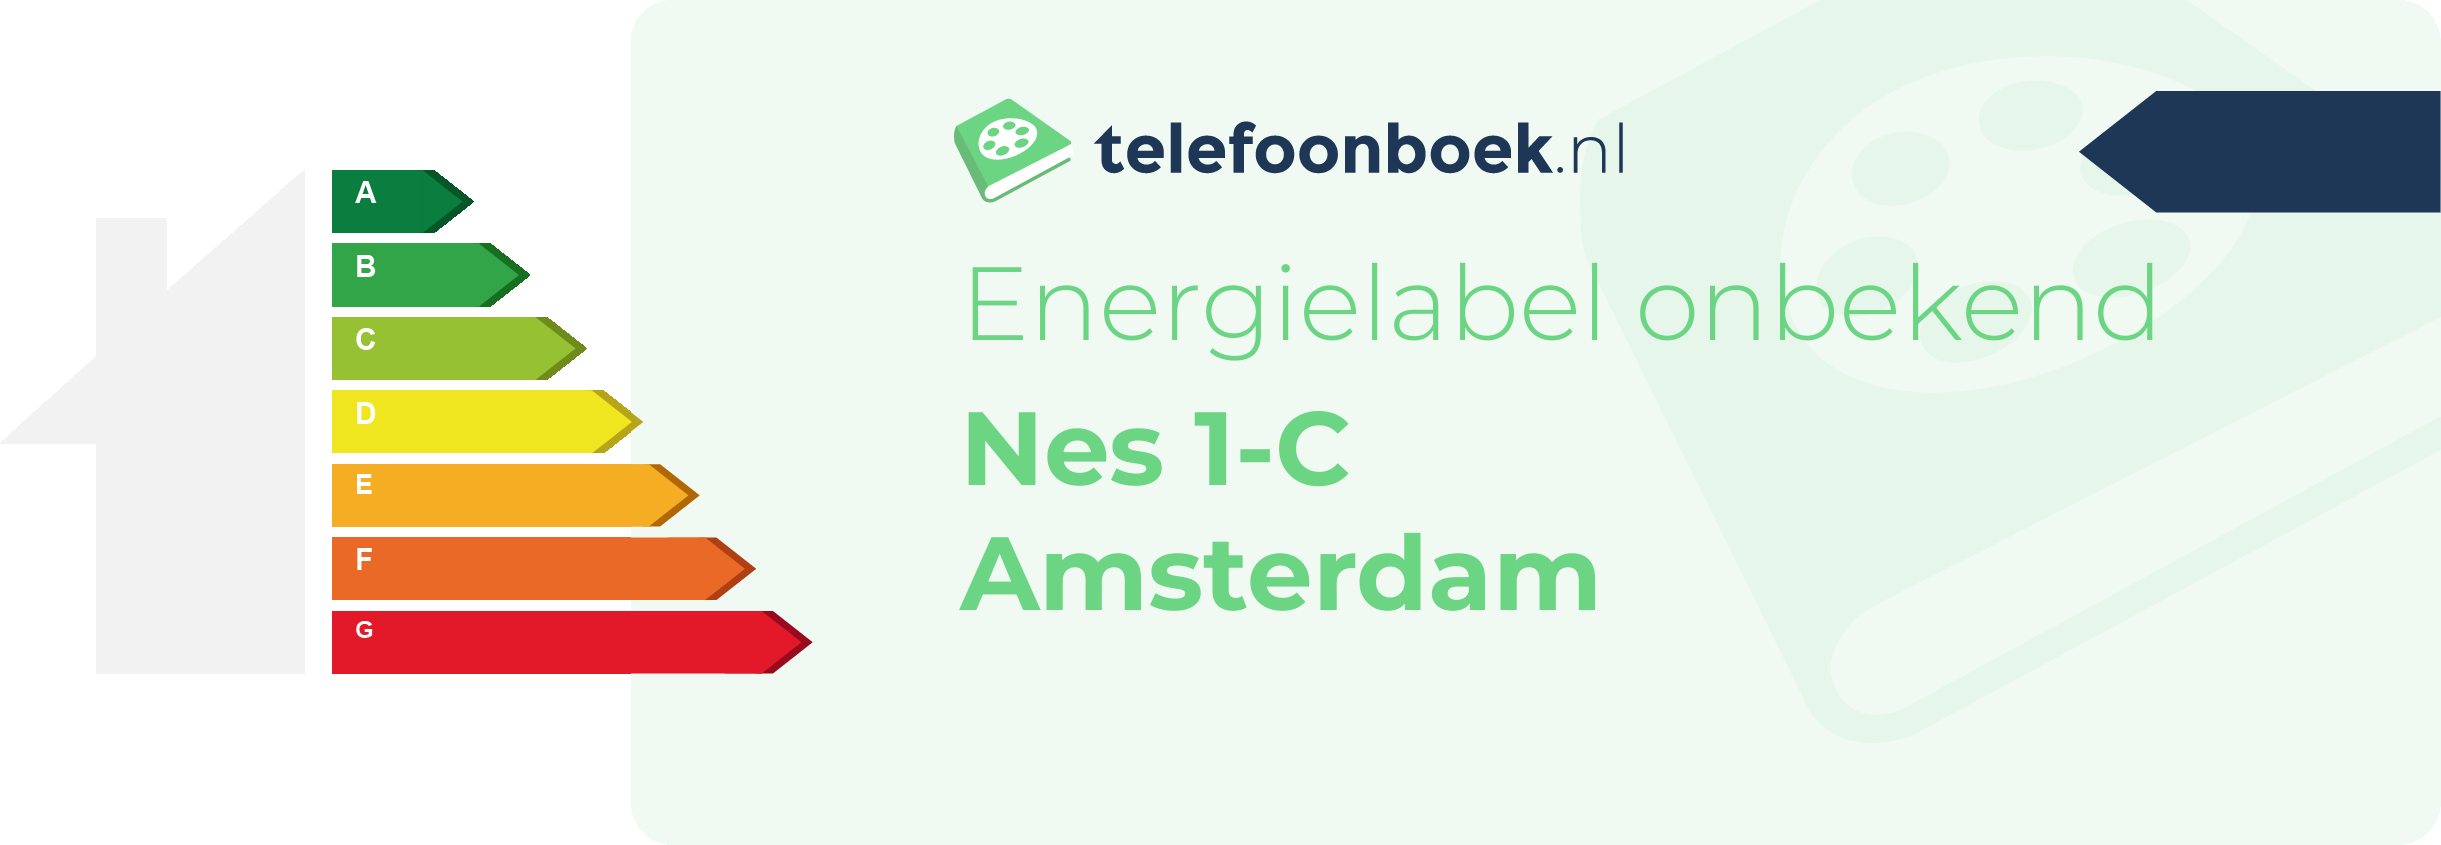 Energielabel Nes 1-C Amsterdam